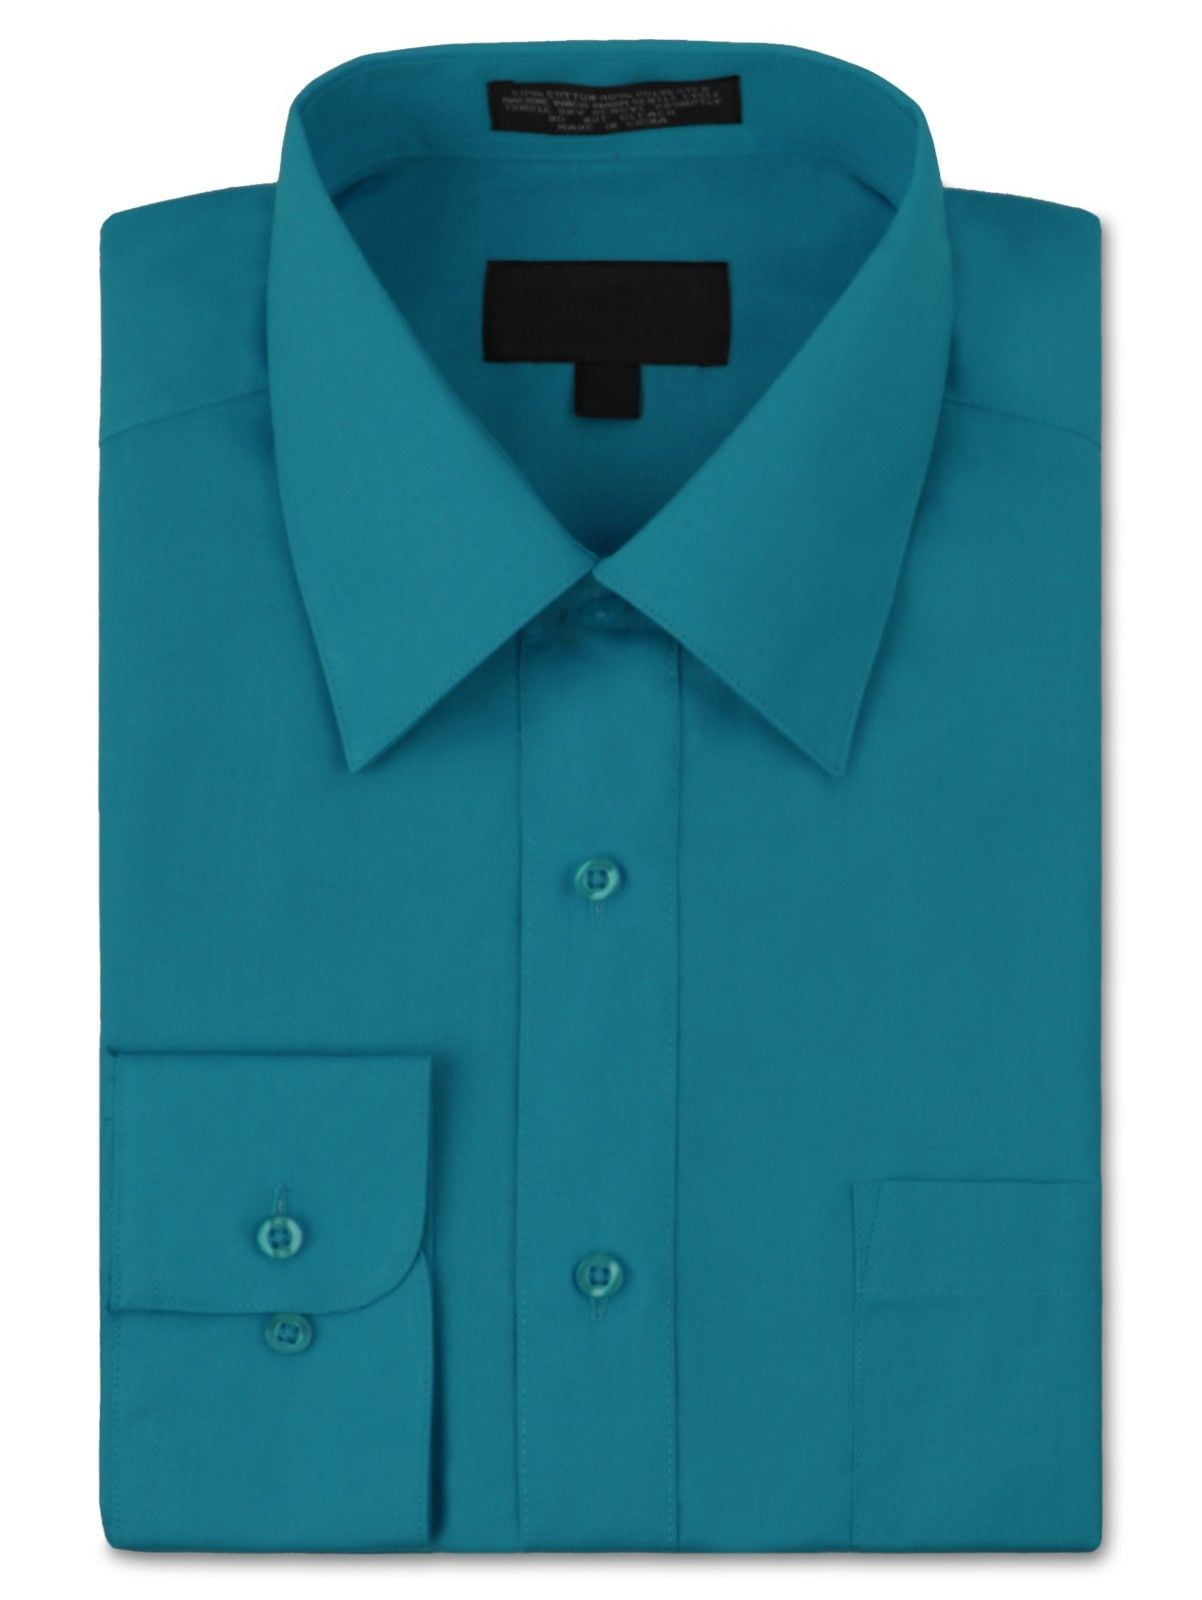 Premium Dress Shirt (Teal Blue ...